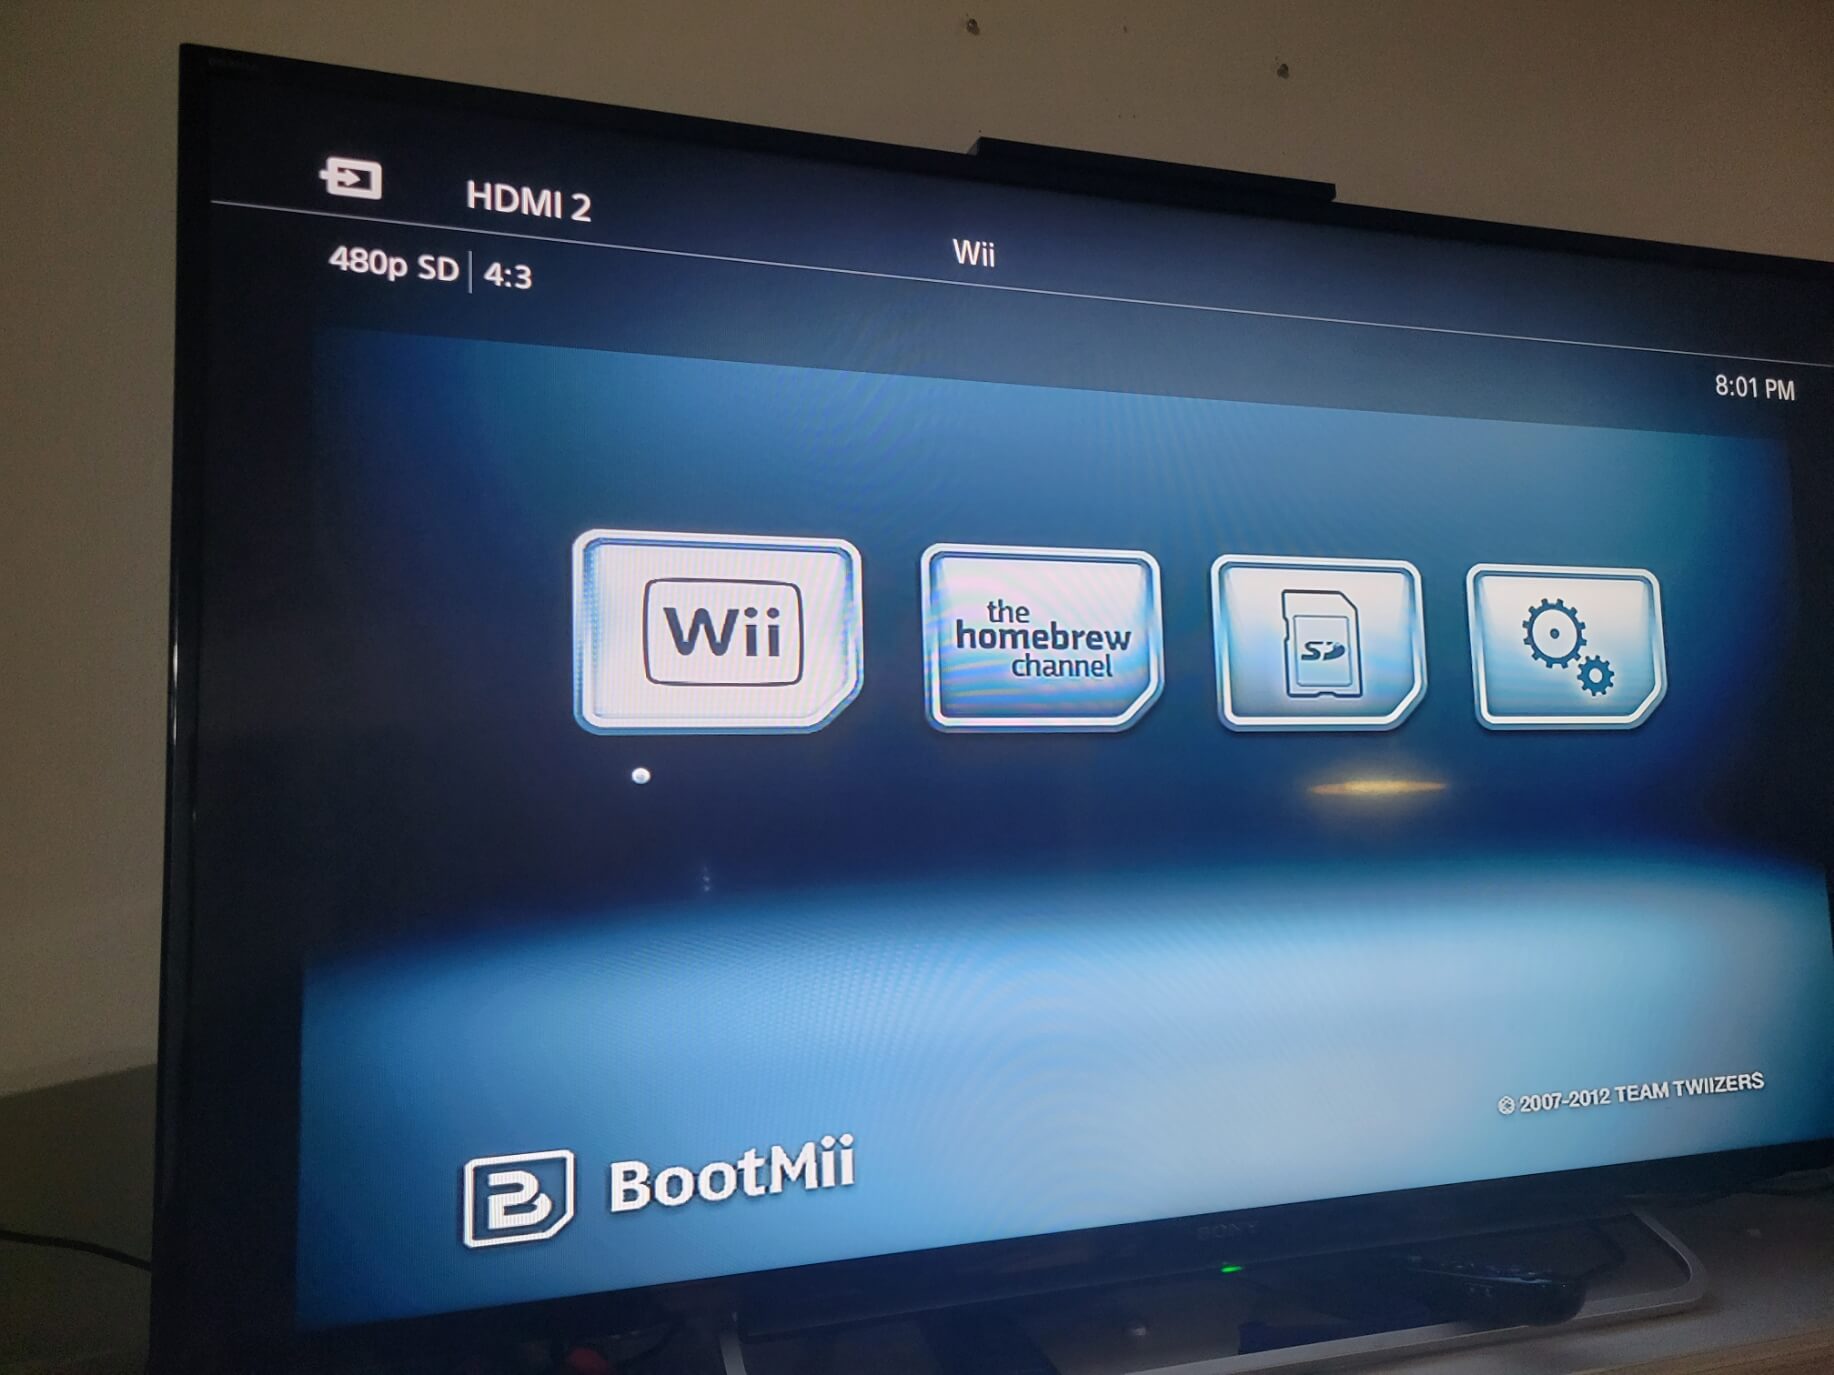 Wii on BootMii screen